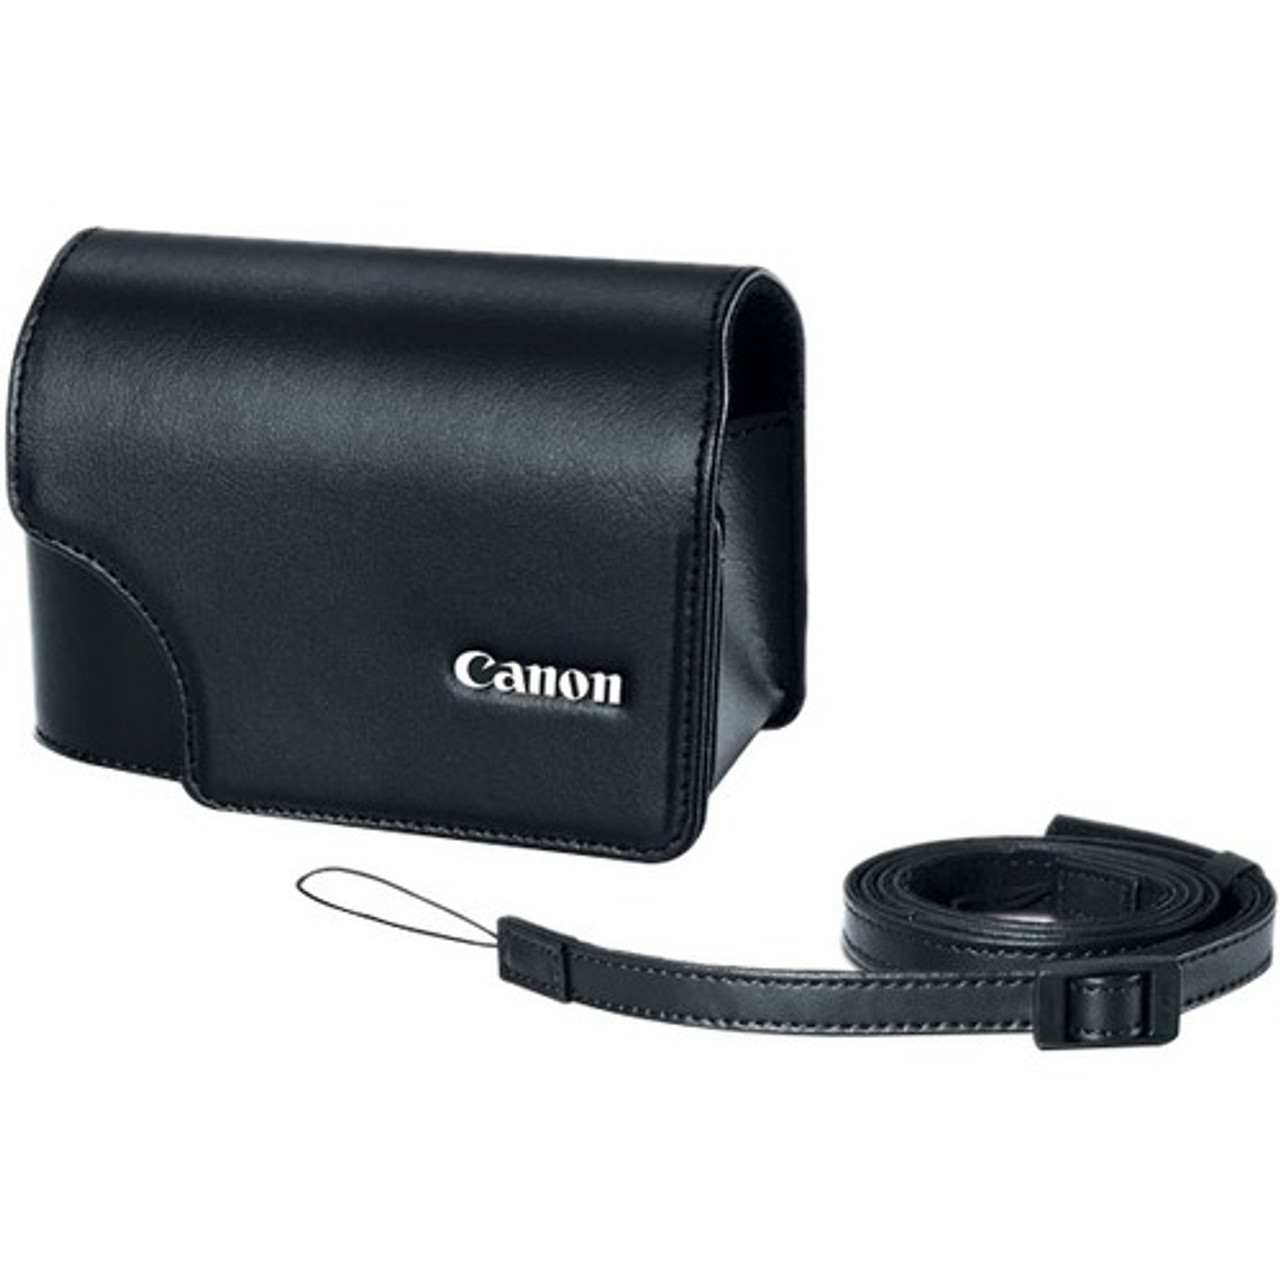 Canon 1625C001